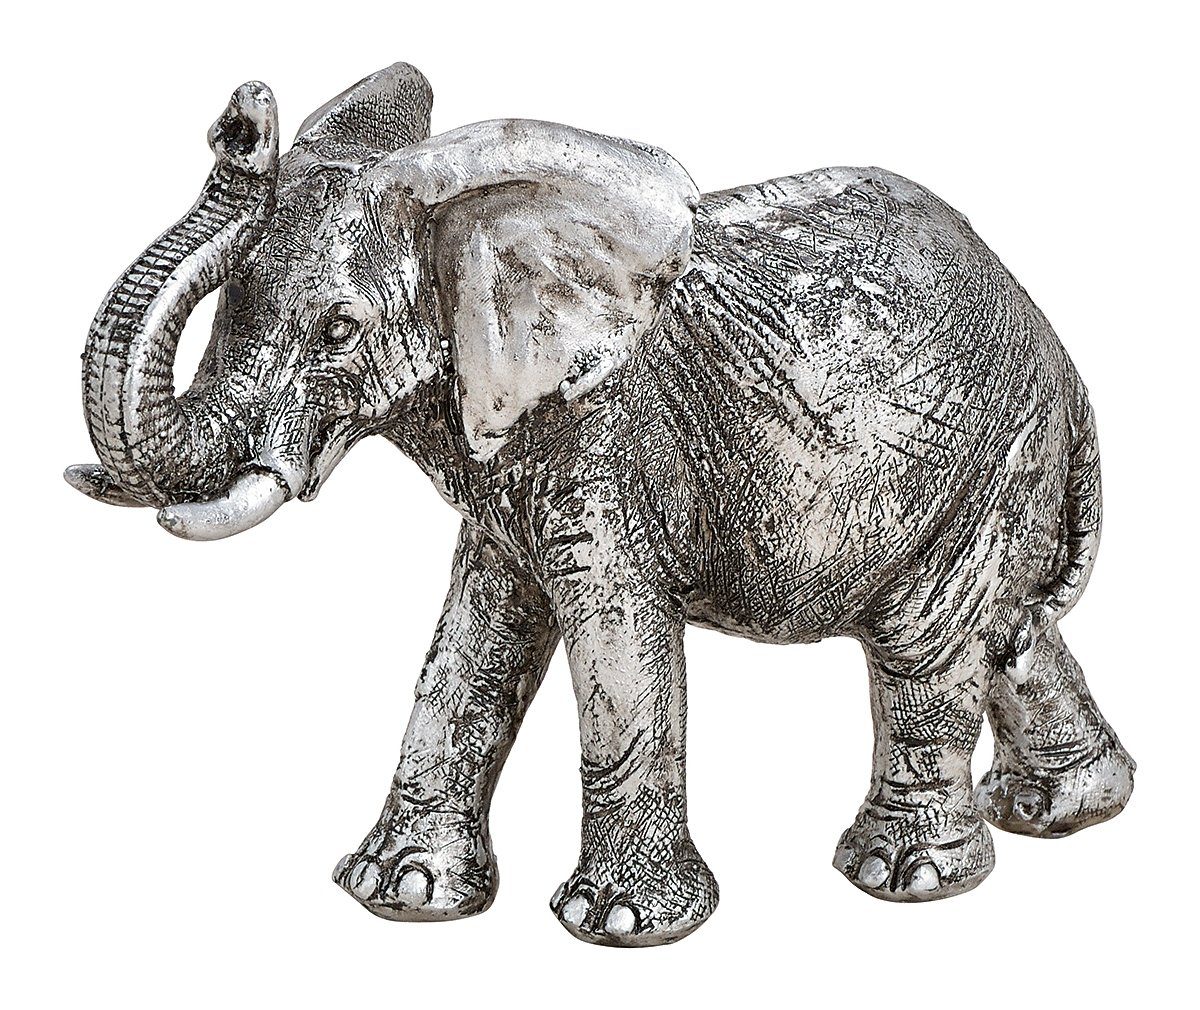 NO NAME Tierfigur Baby-Elefant, silber, B 16 cm, Tierfigur, Elefant-Figur, Dekofigur, Sammlerfigur, Weihnachtsfigur